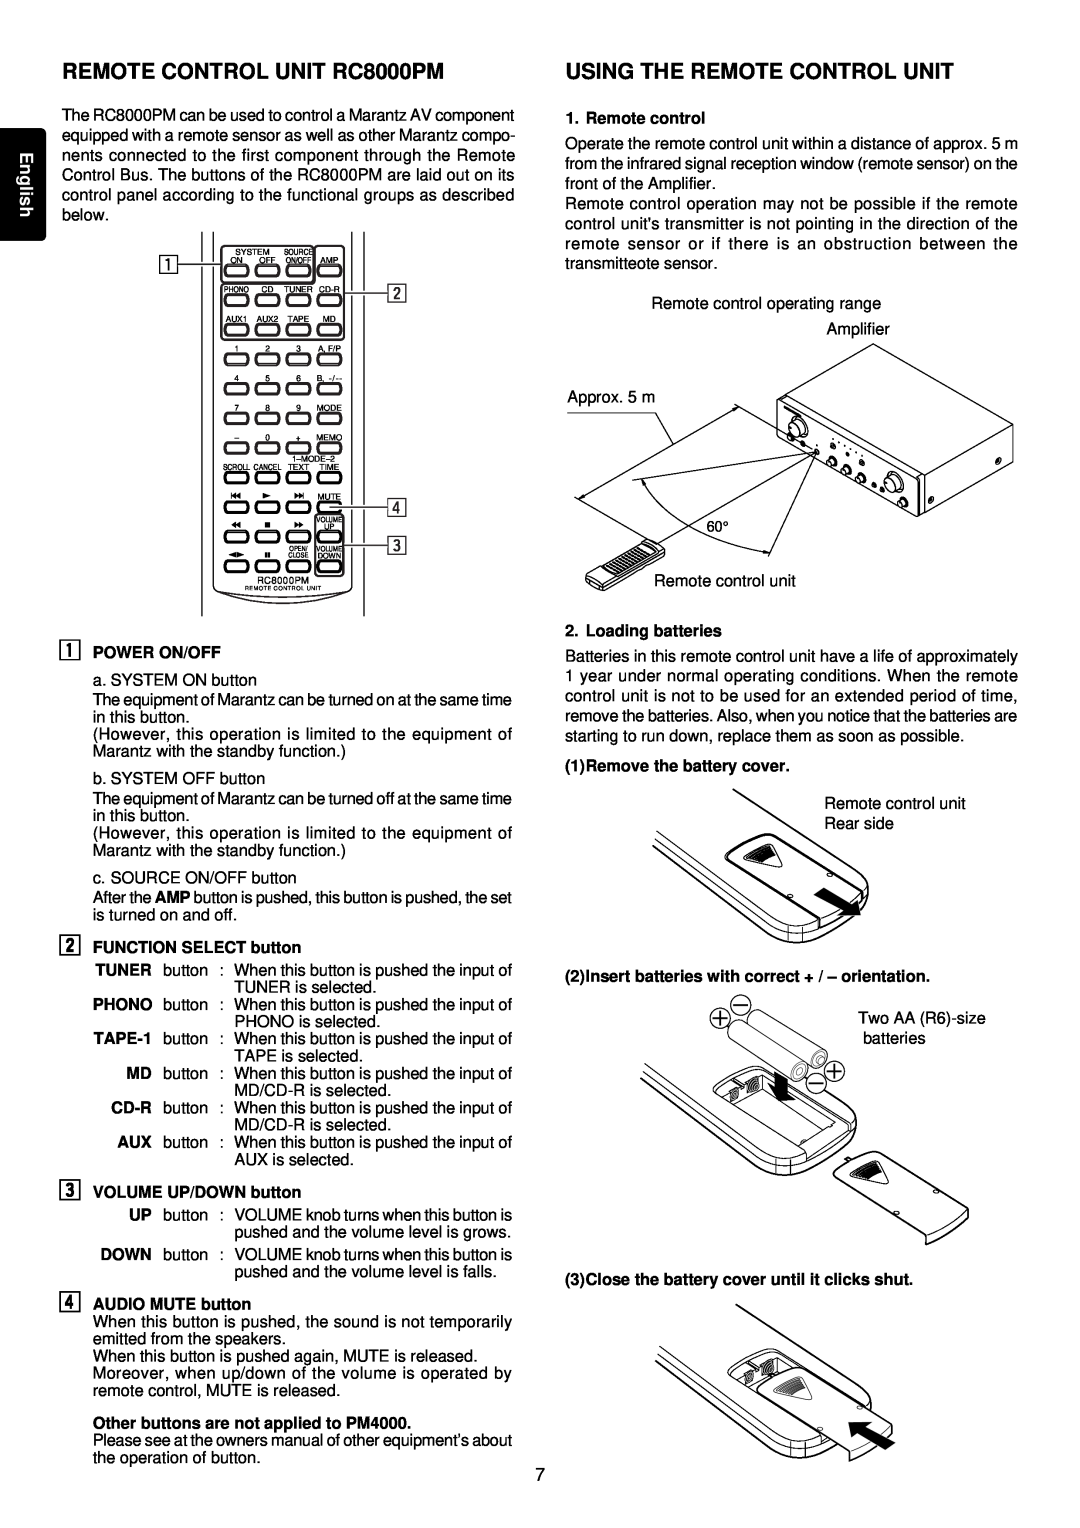 Marantz PM4000 manual REMOTE CONTROL UNIT RC8000PM, Using The Remote Control Unit, English 